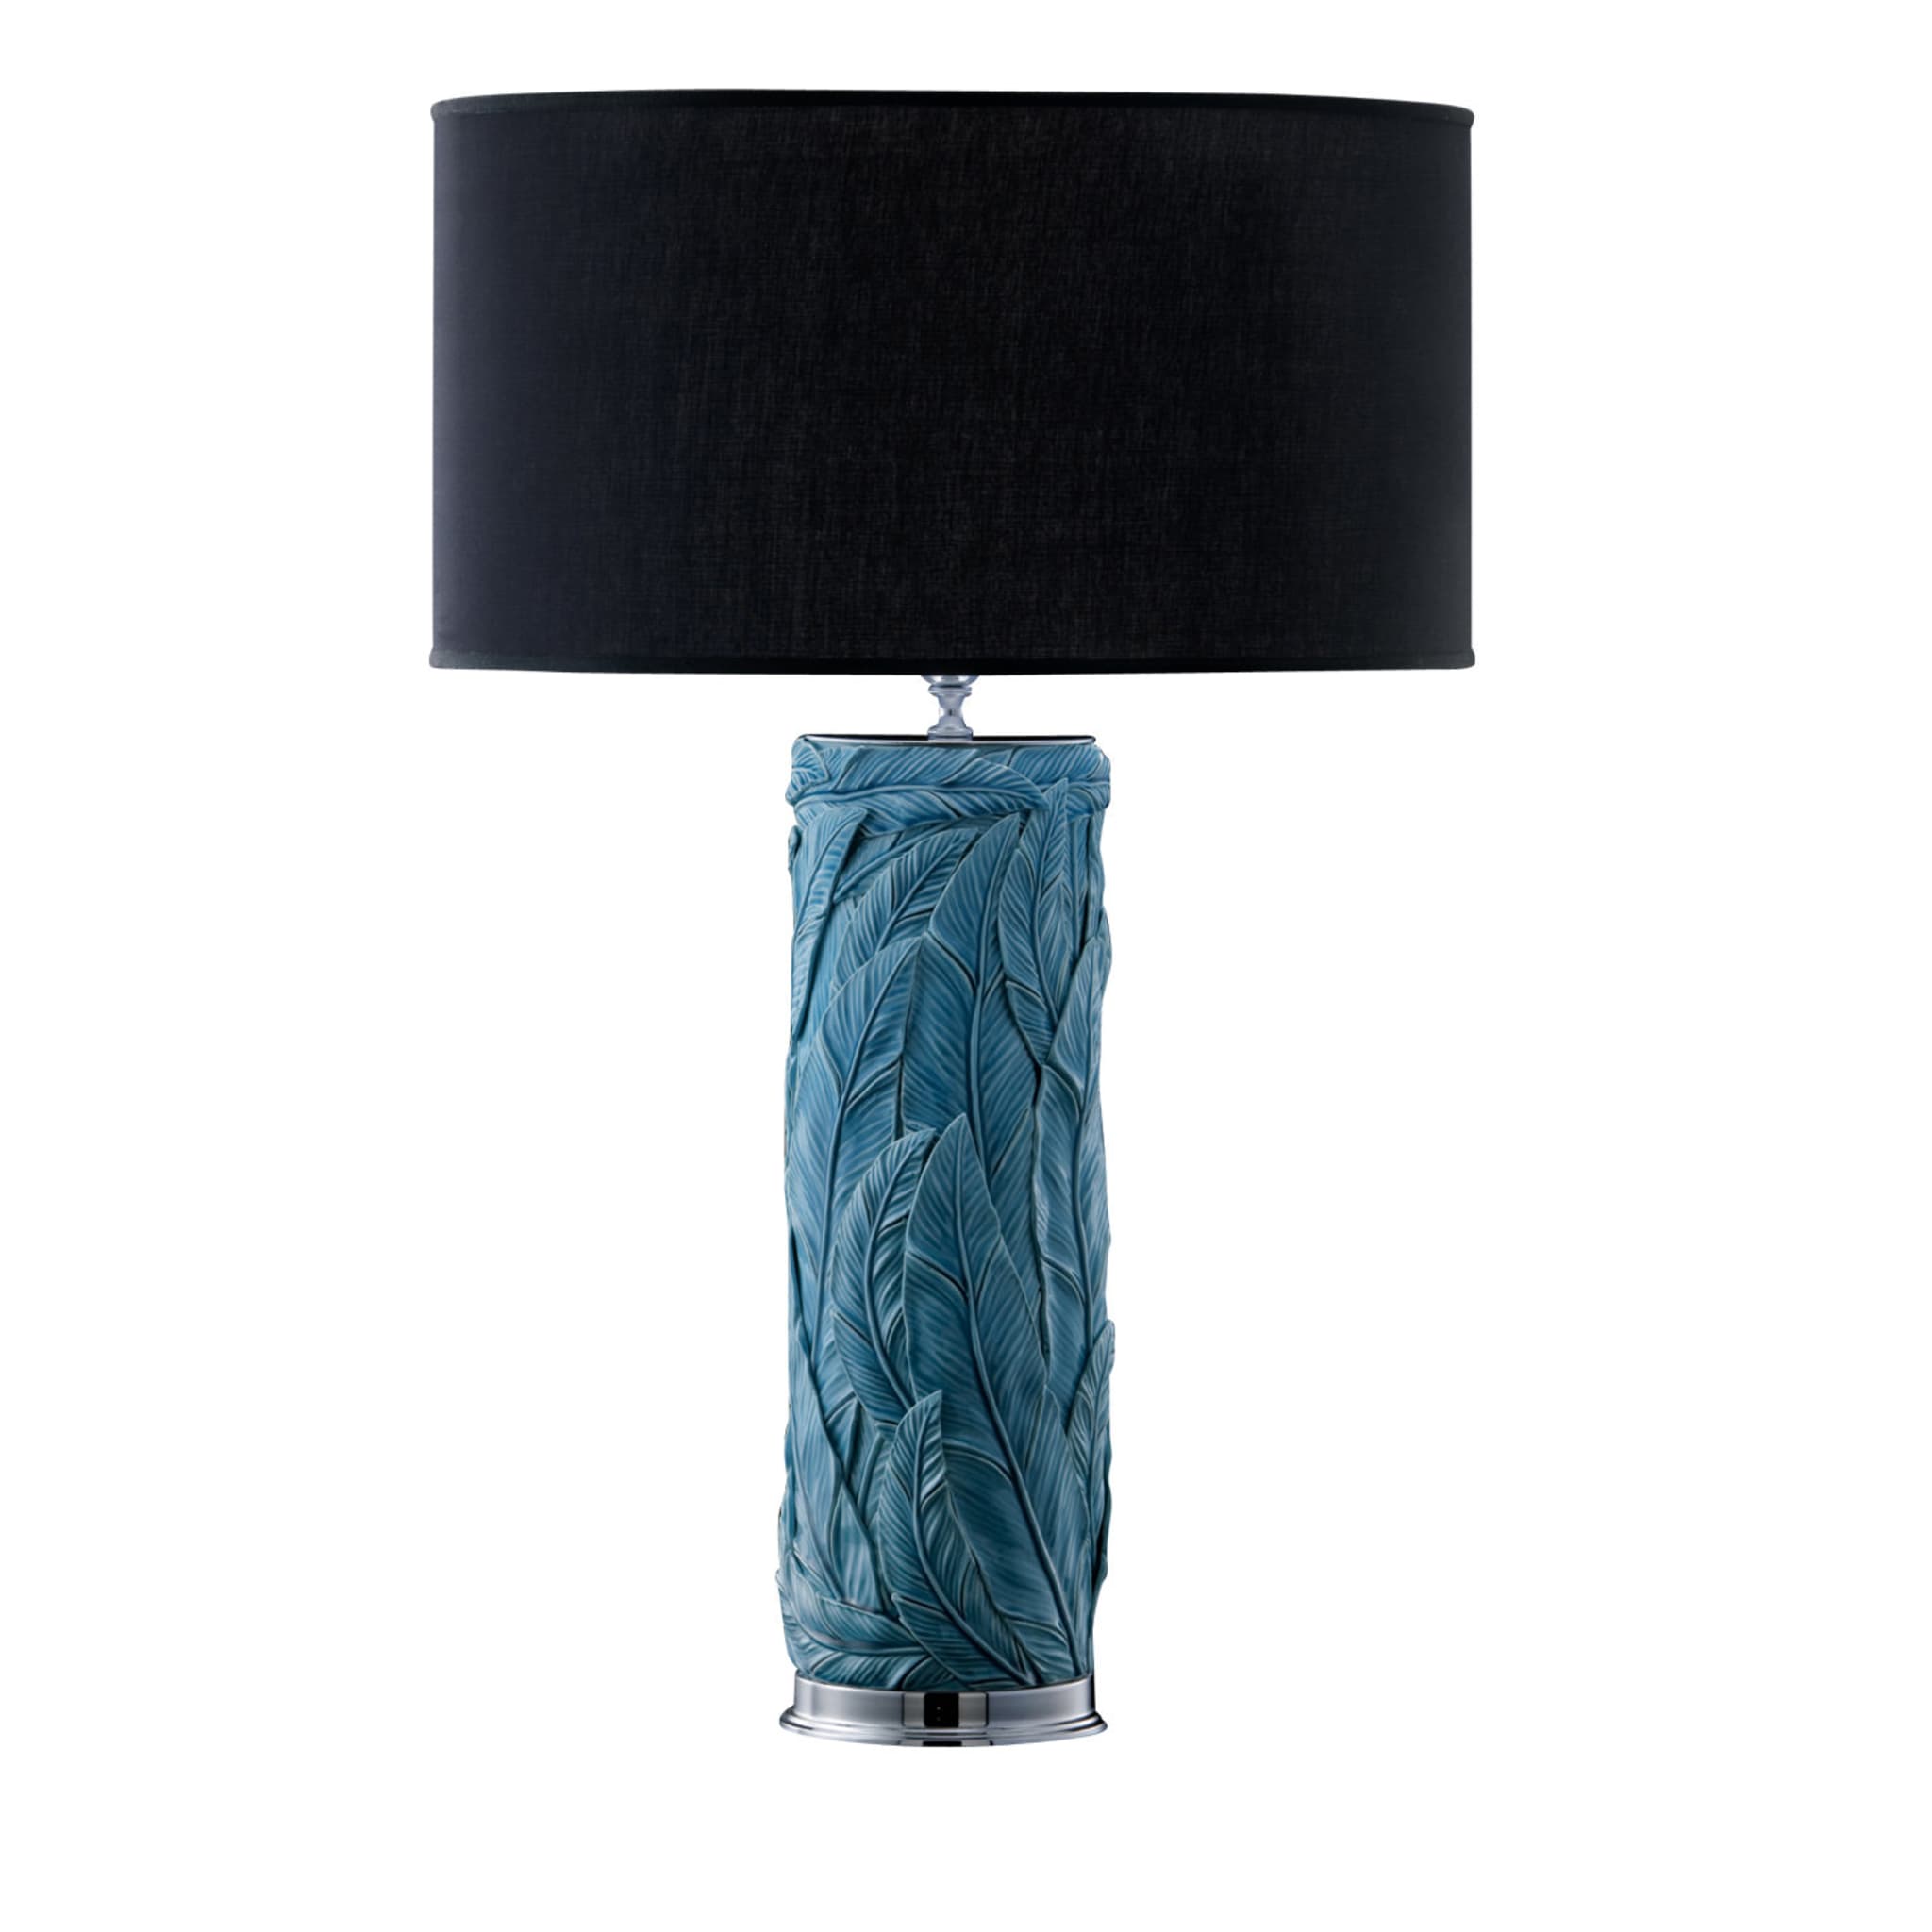 Jungla Turquoise Desk Lamp - Main view